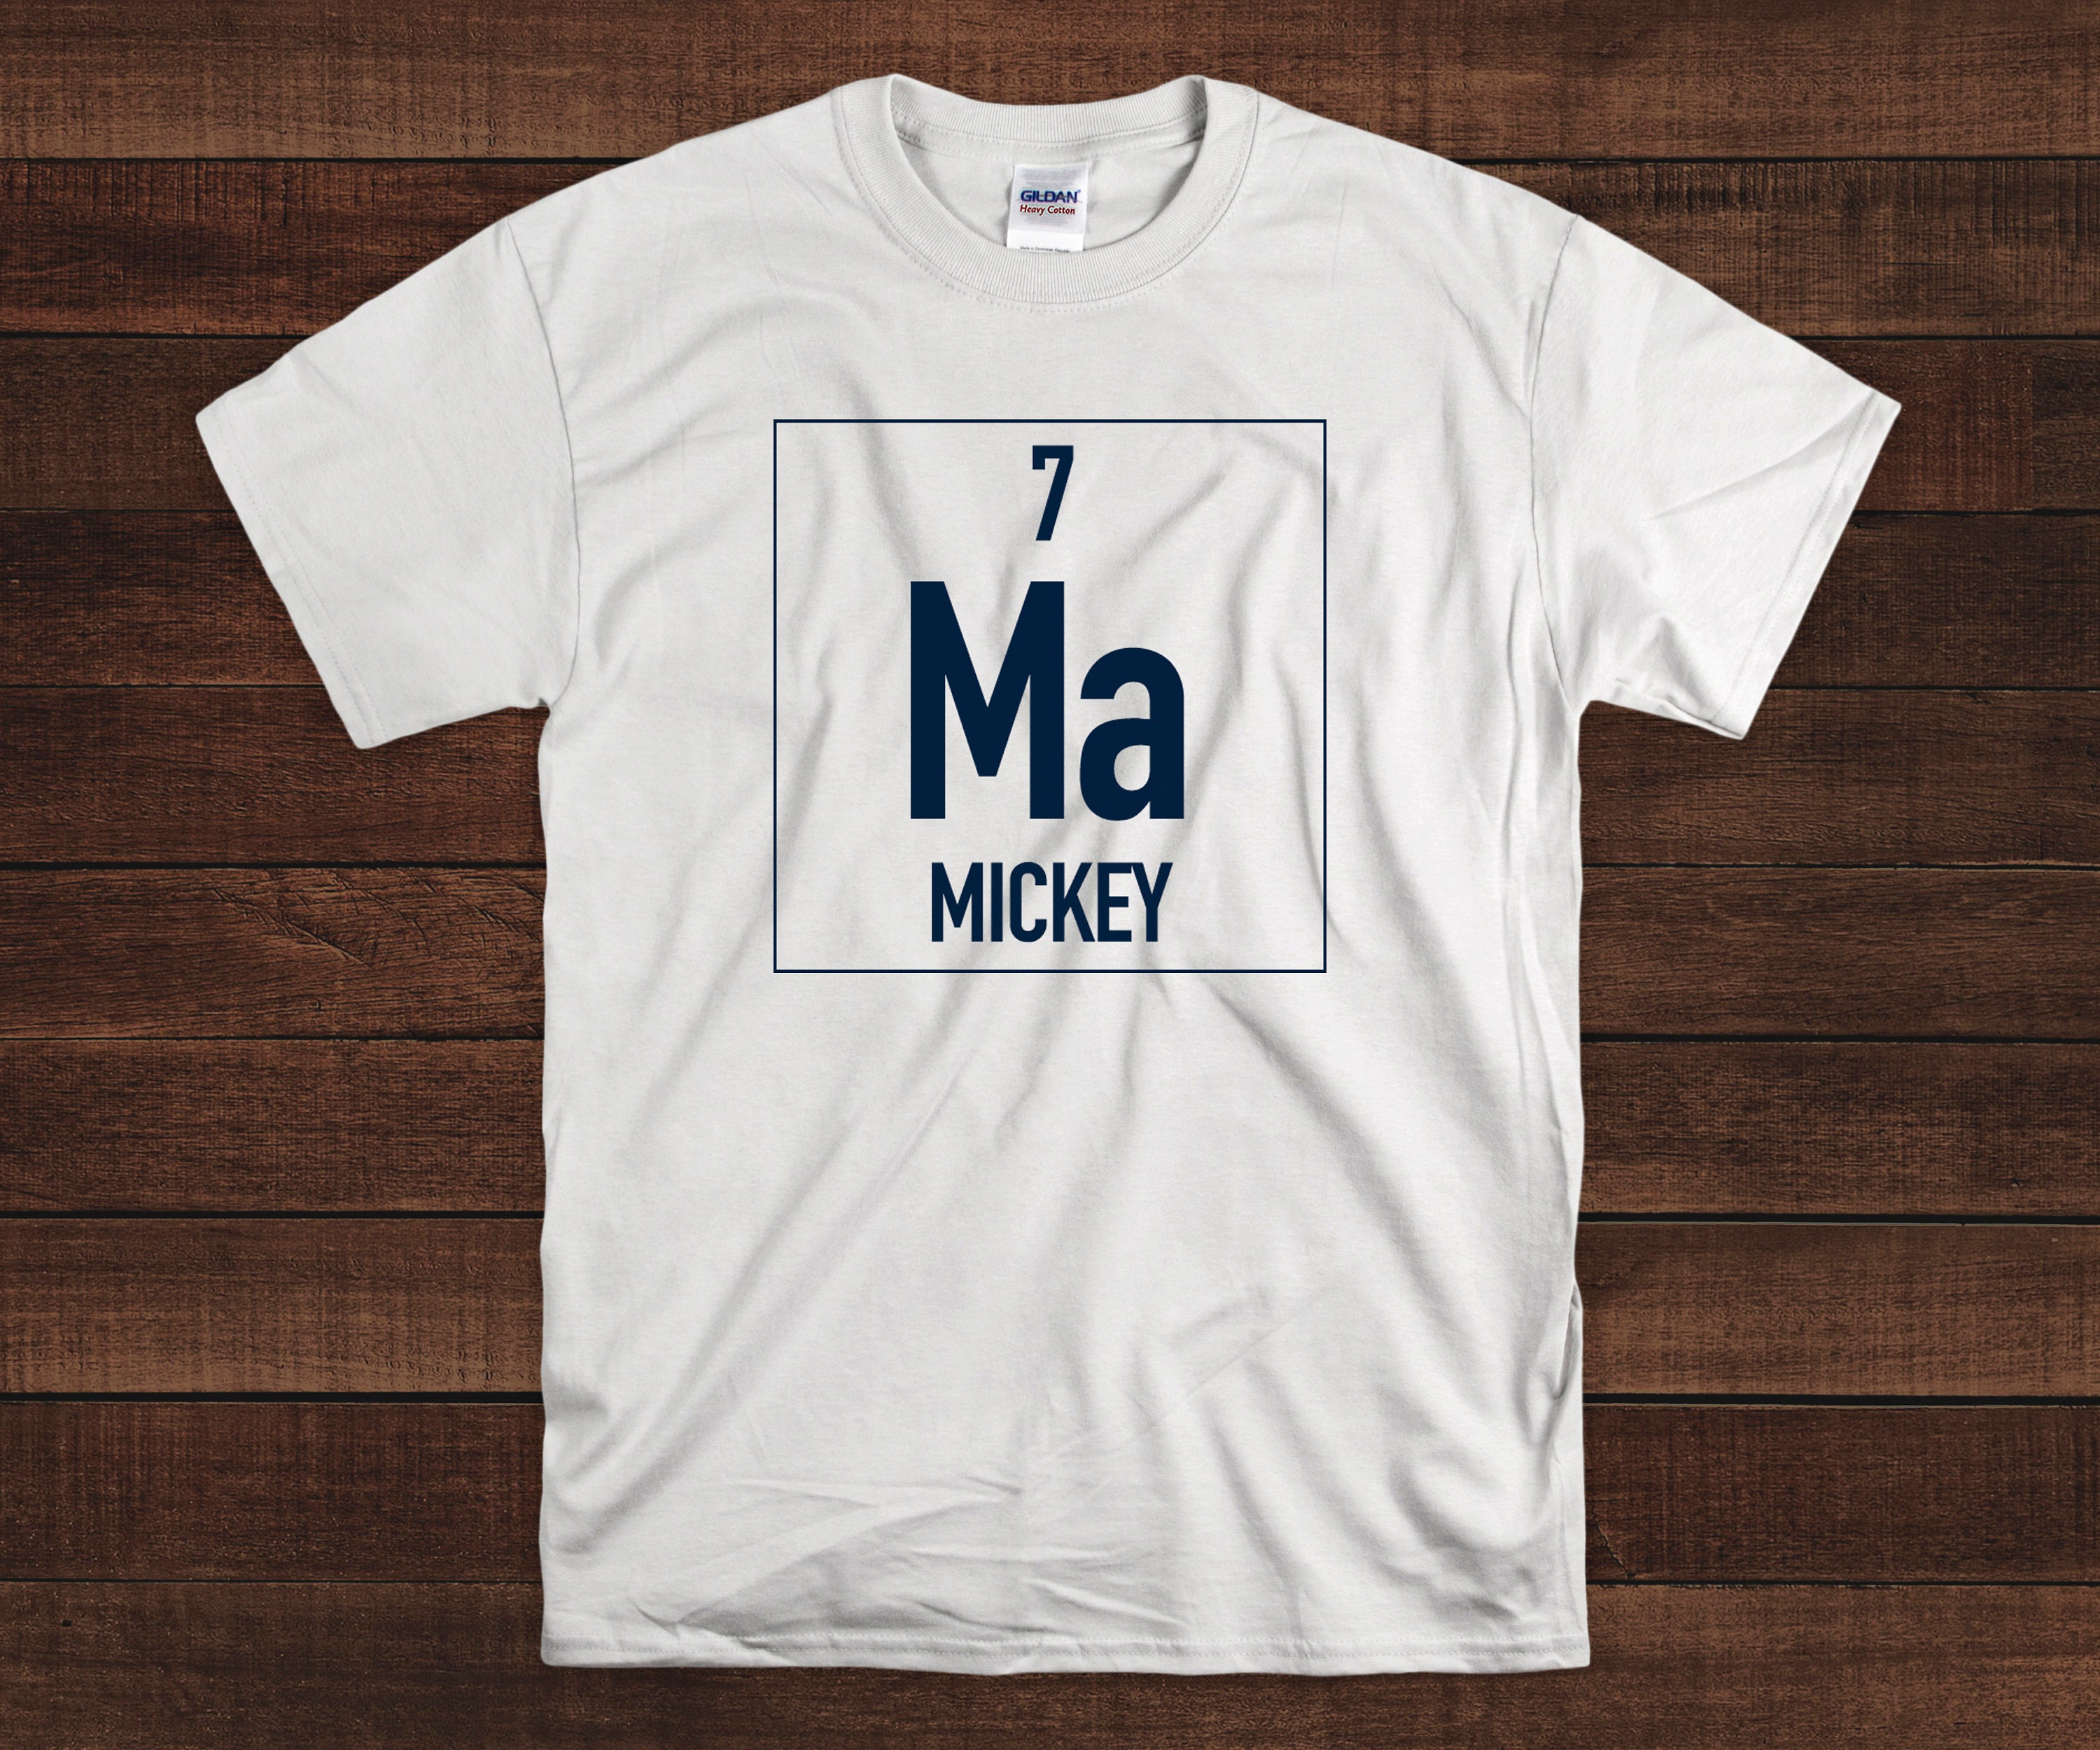 RoundingThirdShop Yankees Shirt - Mickey Mantle Shirt - Periodic Table of Yankees T-Shirt - Yankees Christmas Gift